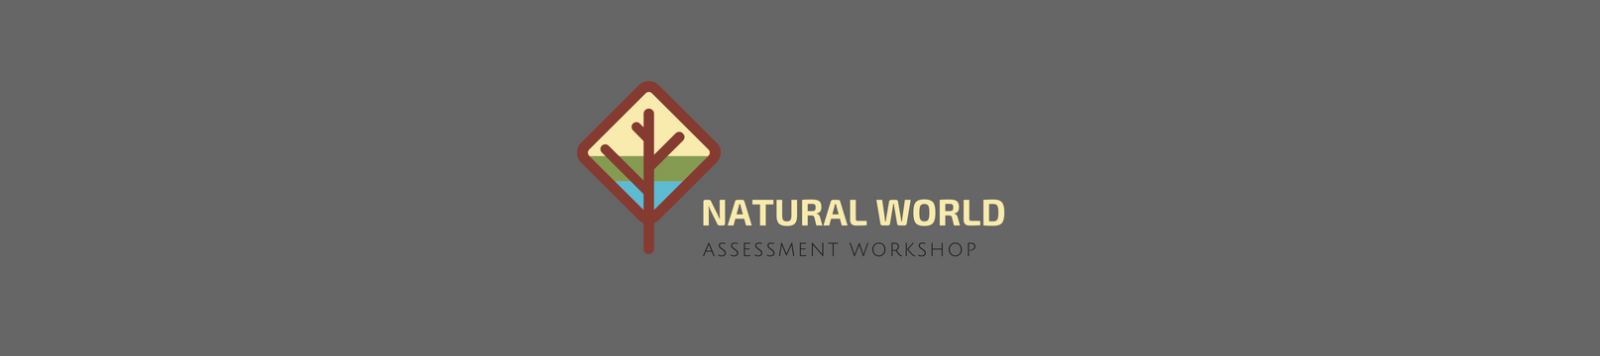 Nathural World Assessment Workshop Logo